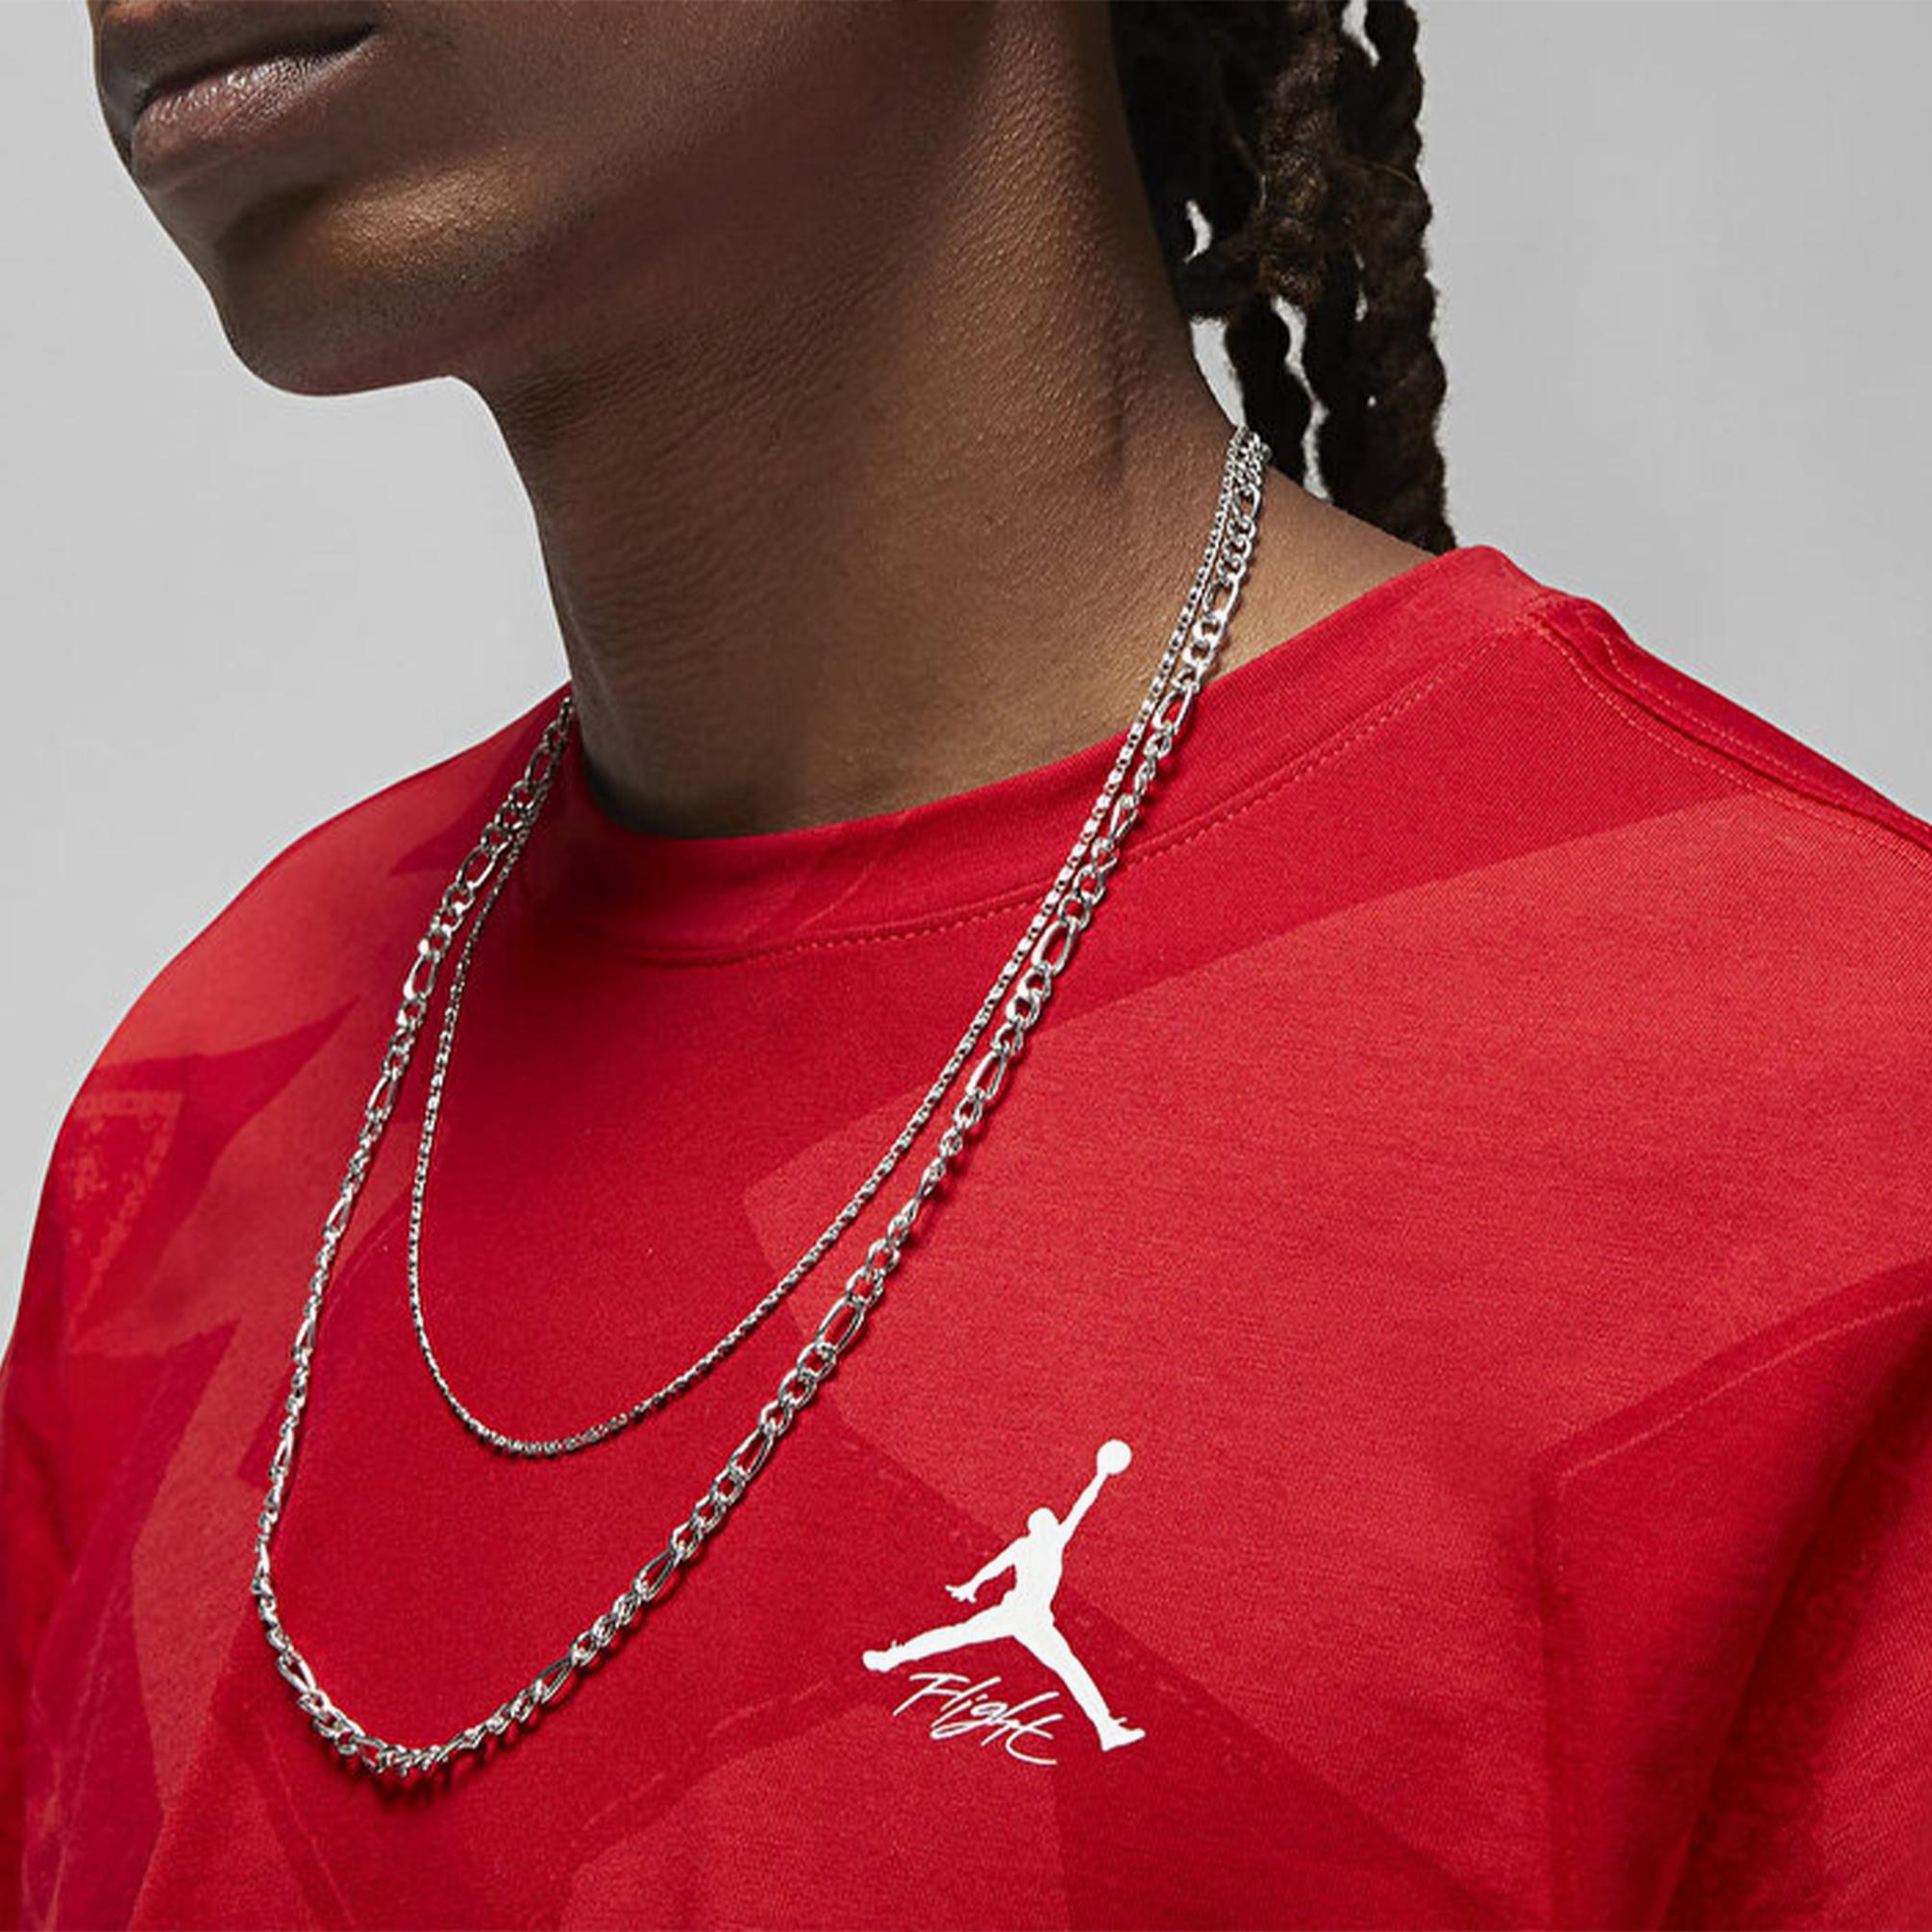  Jordan Essentials Erkek Kırmızı T-Shirt